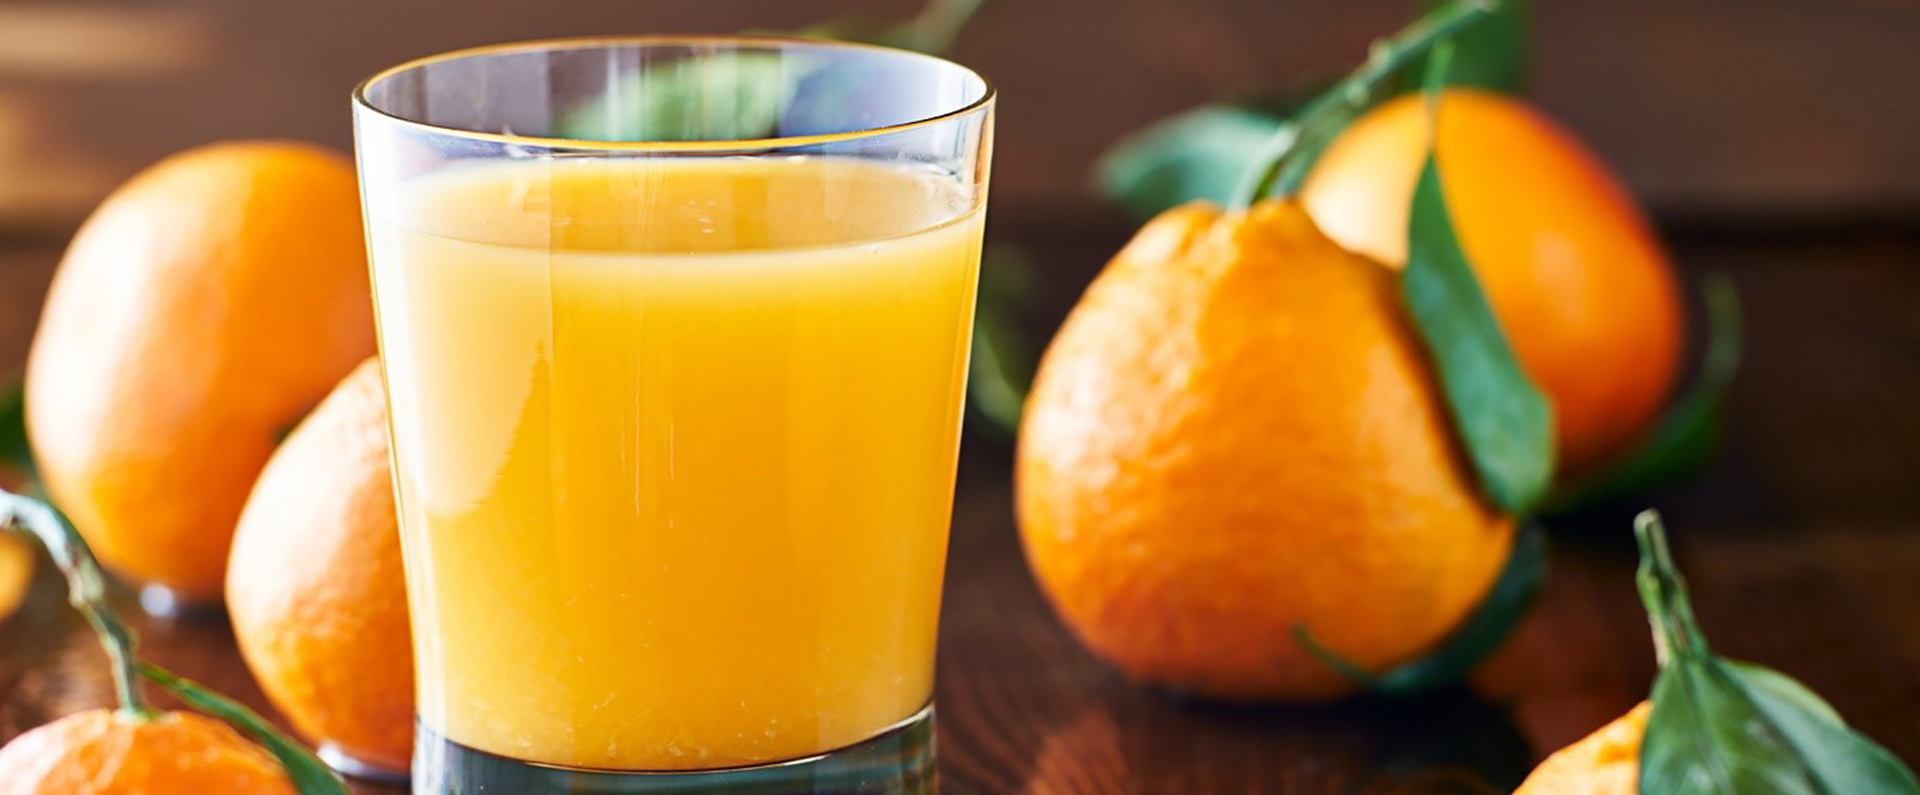 Oranges and a glass of fresh orange juice